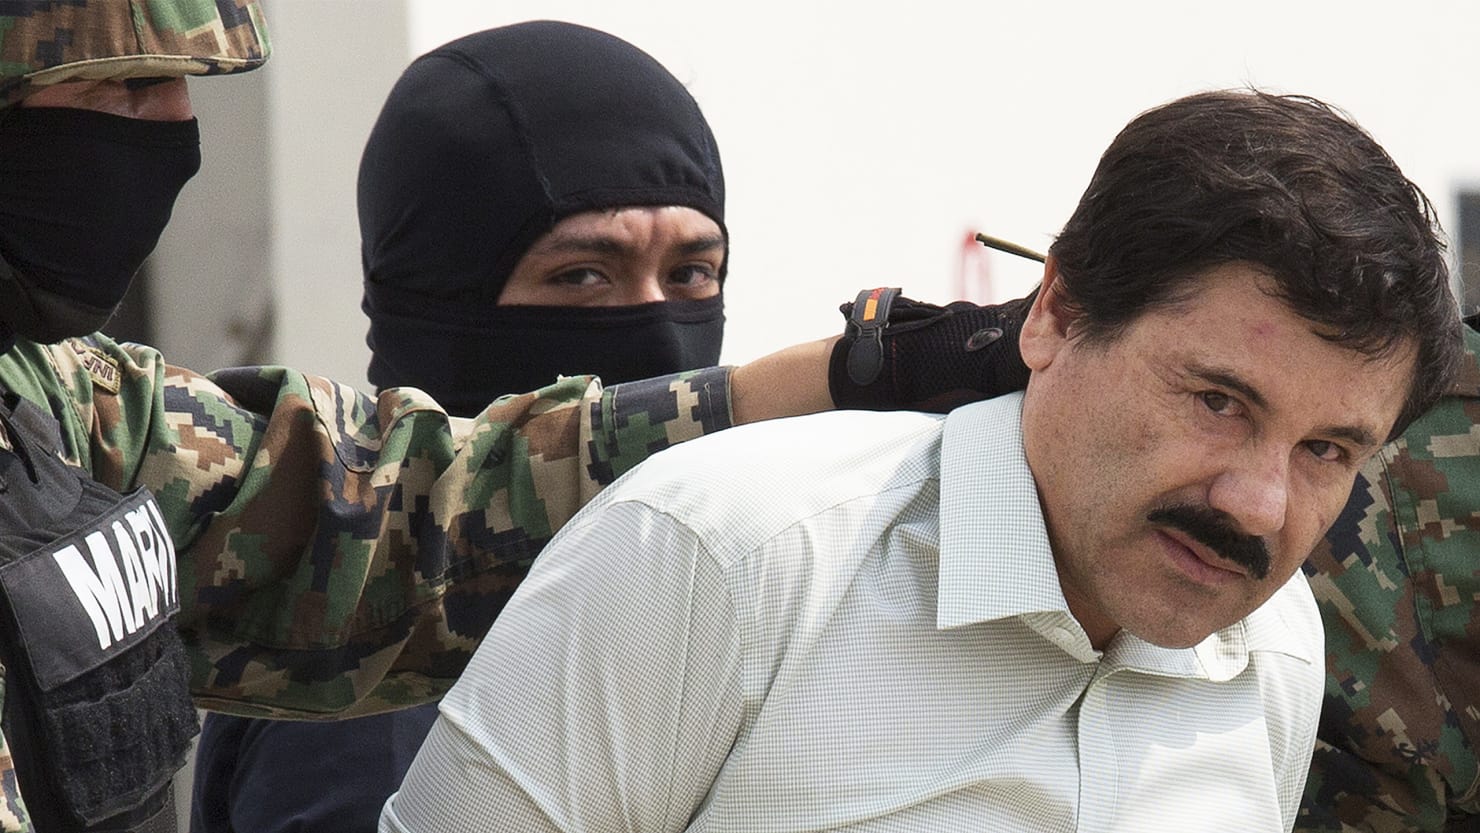 El Chapo' faces prison for life.